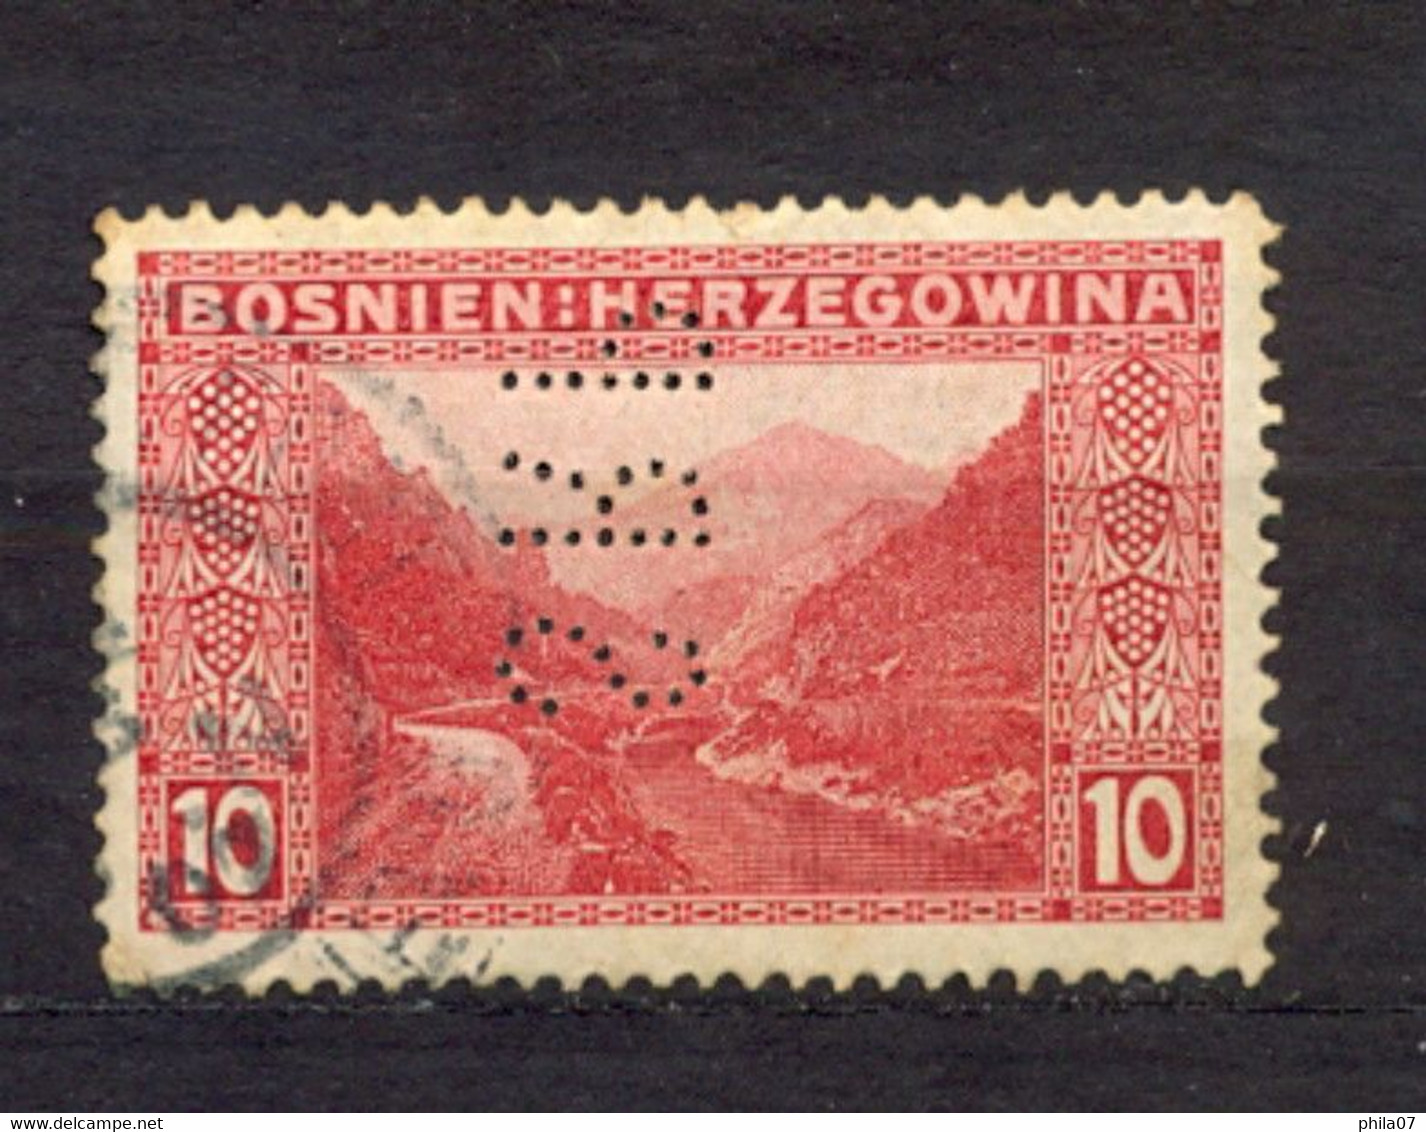 BOSNIA AND HERZEGOVINA - 10 H, Perfin SRP (j.b. Schmarda, Roter&Perschitz), Printing House - Bosnien-Herzegowina